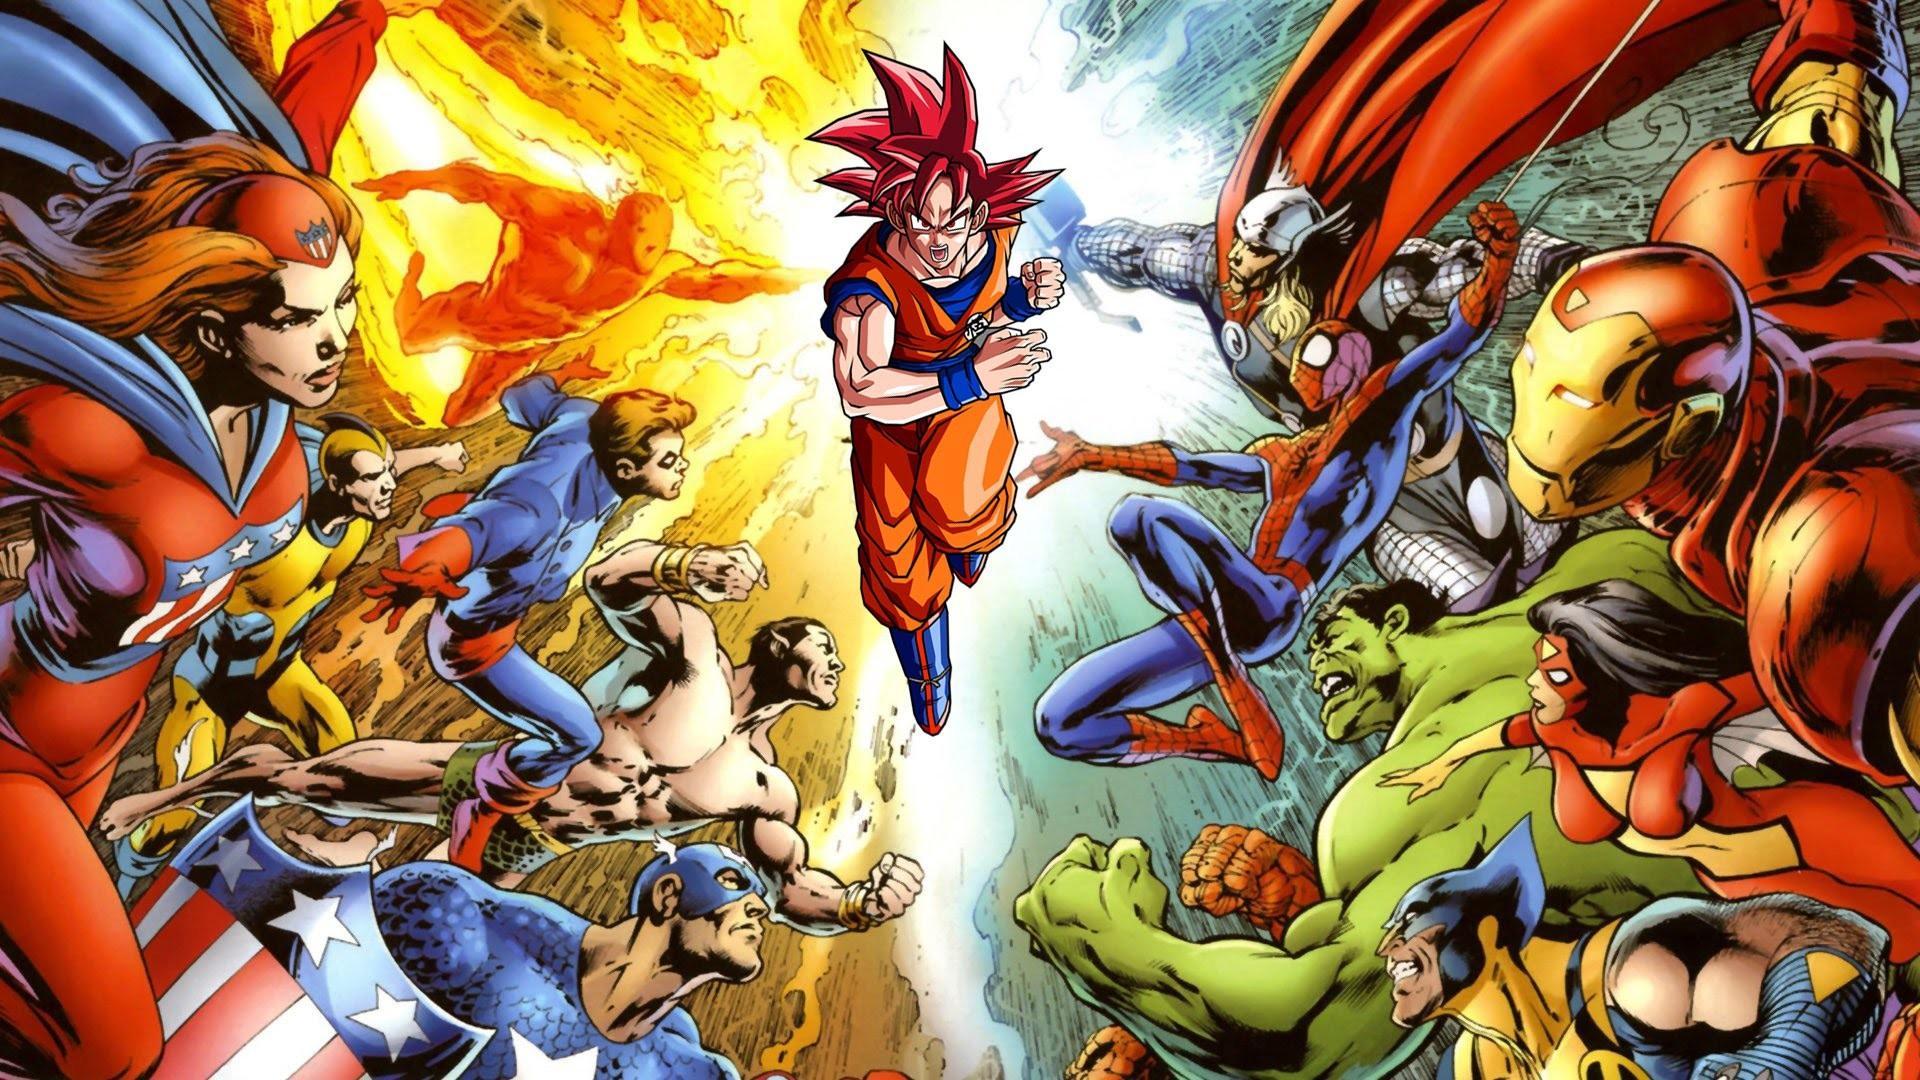 The impact of manga on the global comics scene